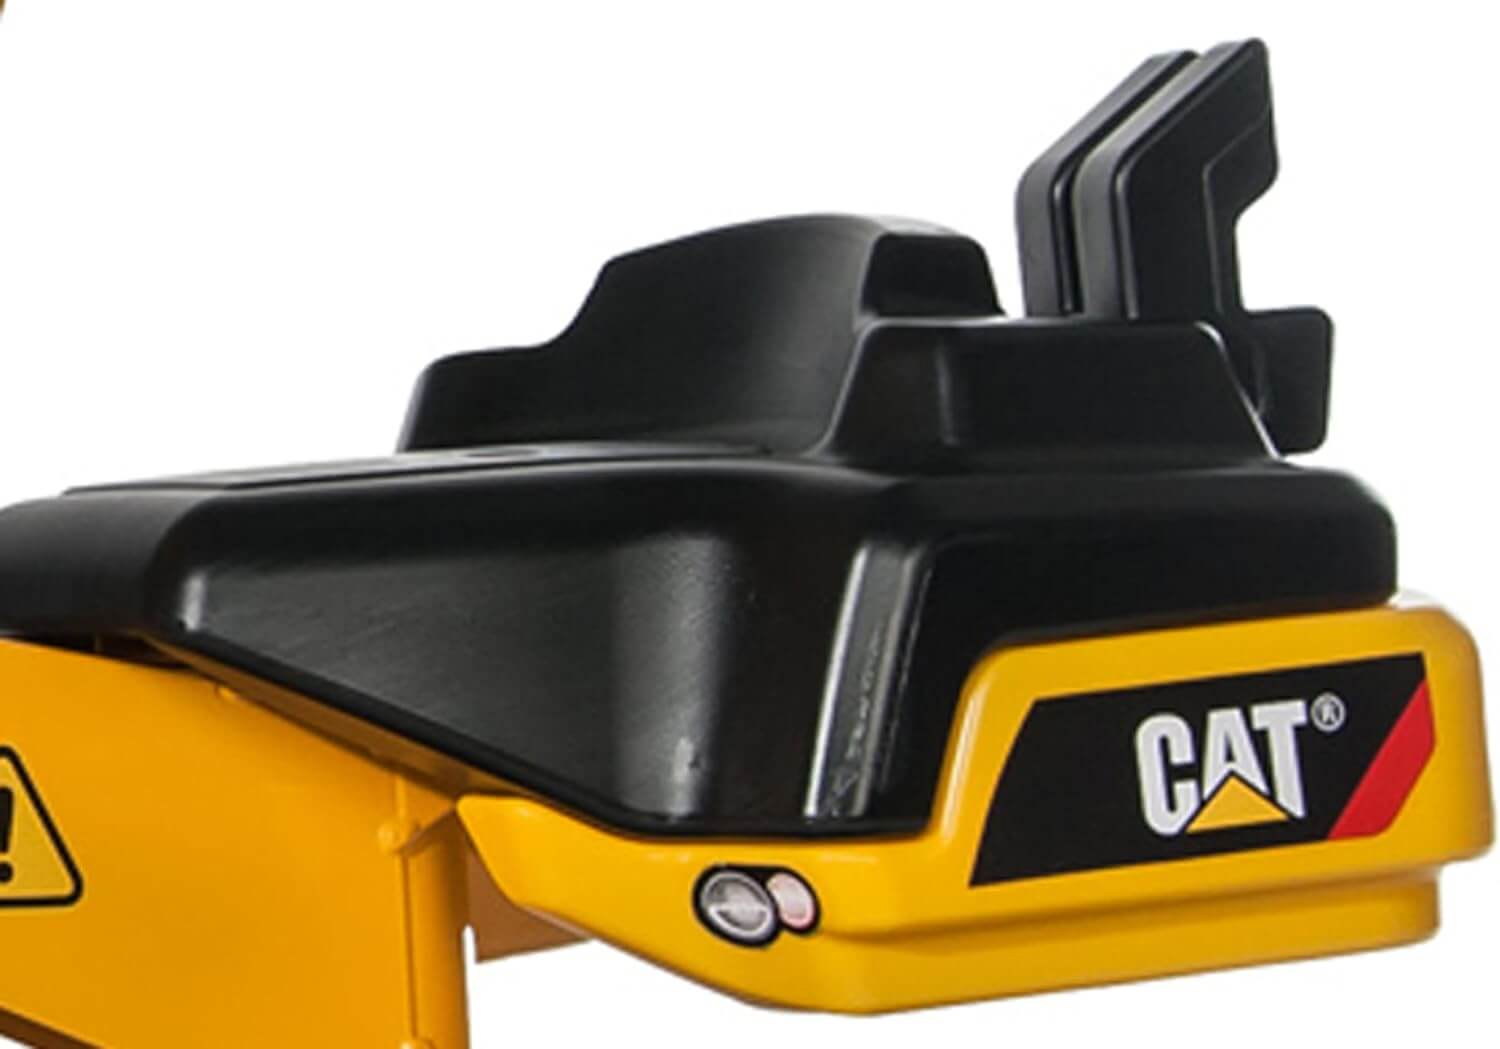 Kettler USA Rolly CAT Caterpillar METAL Digger Push Construction Toy, 513215